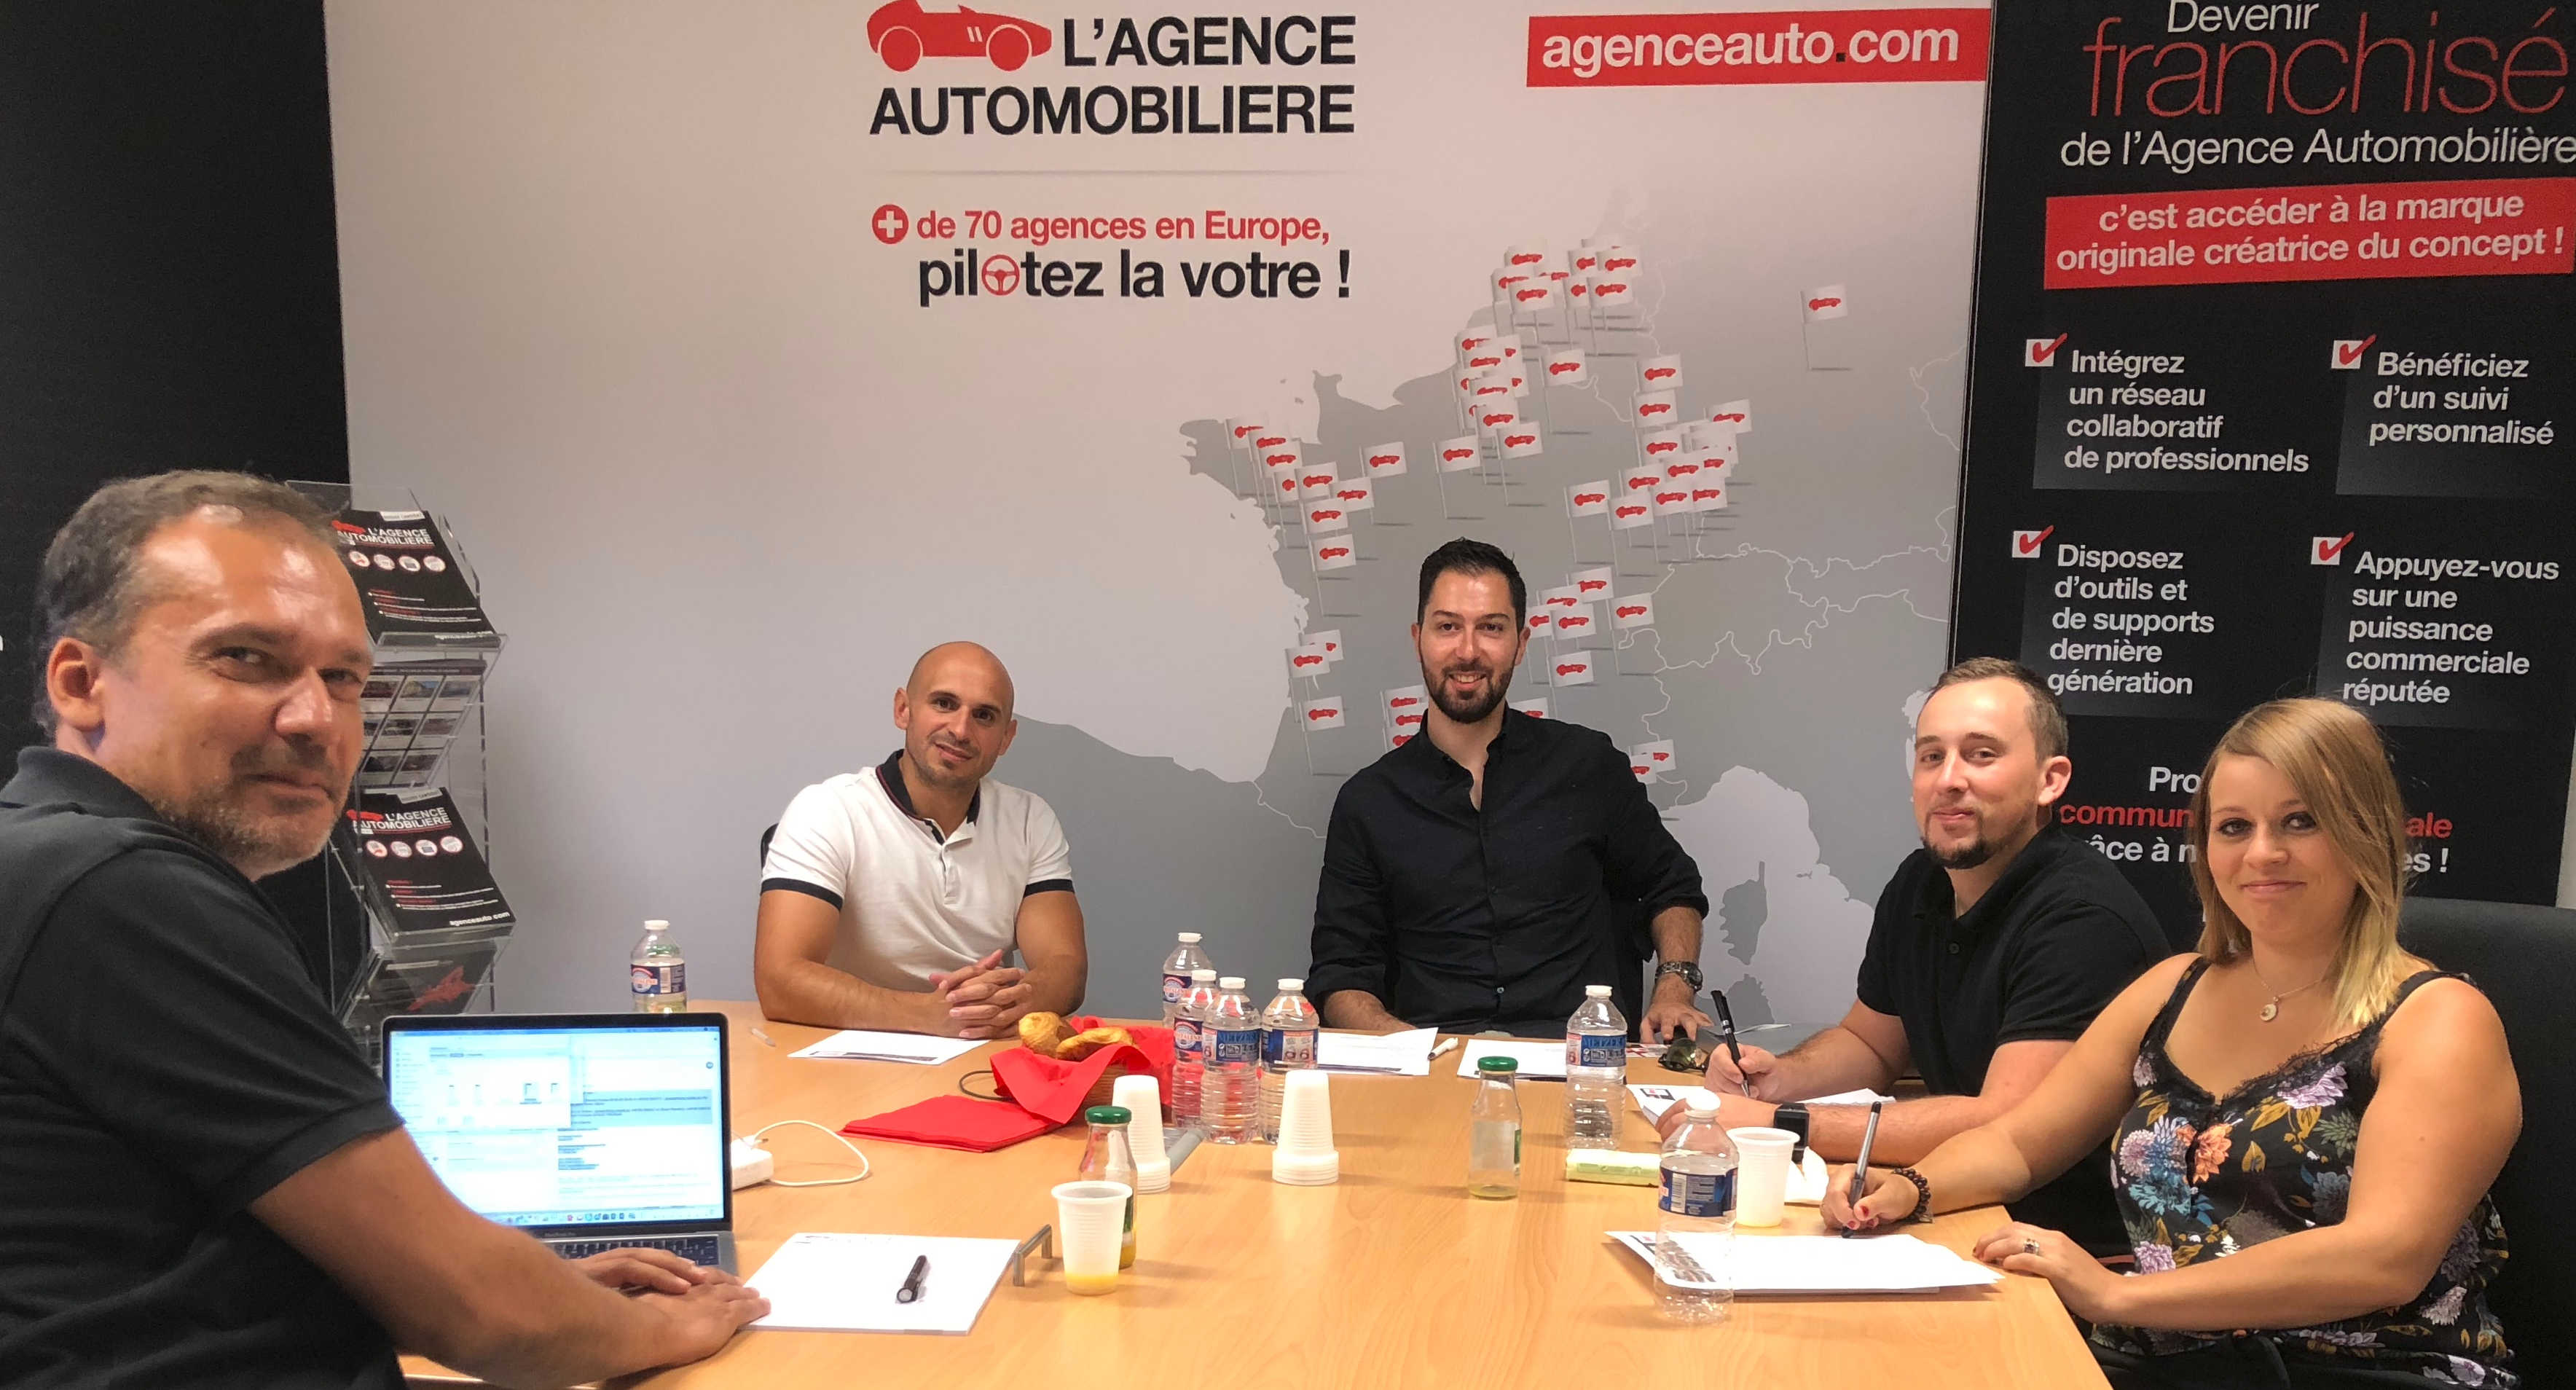 Agence Automobiliere, image groupe-collaborateur-freepik-2017